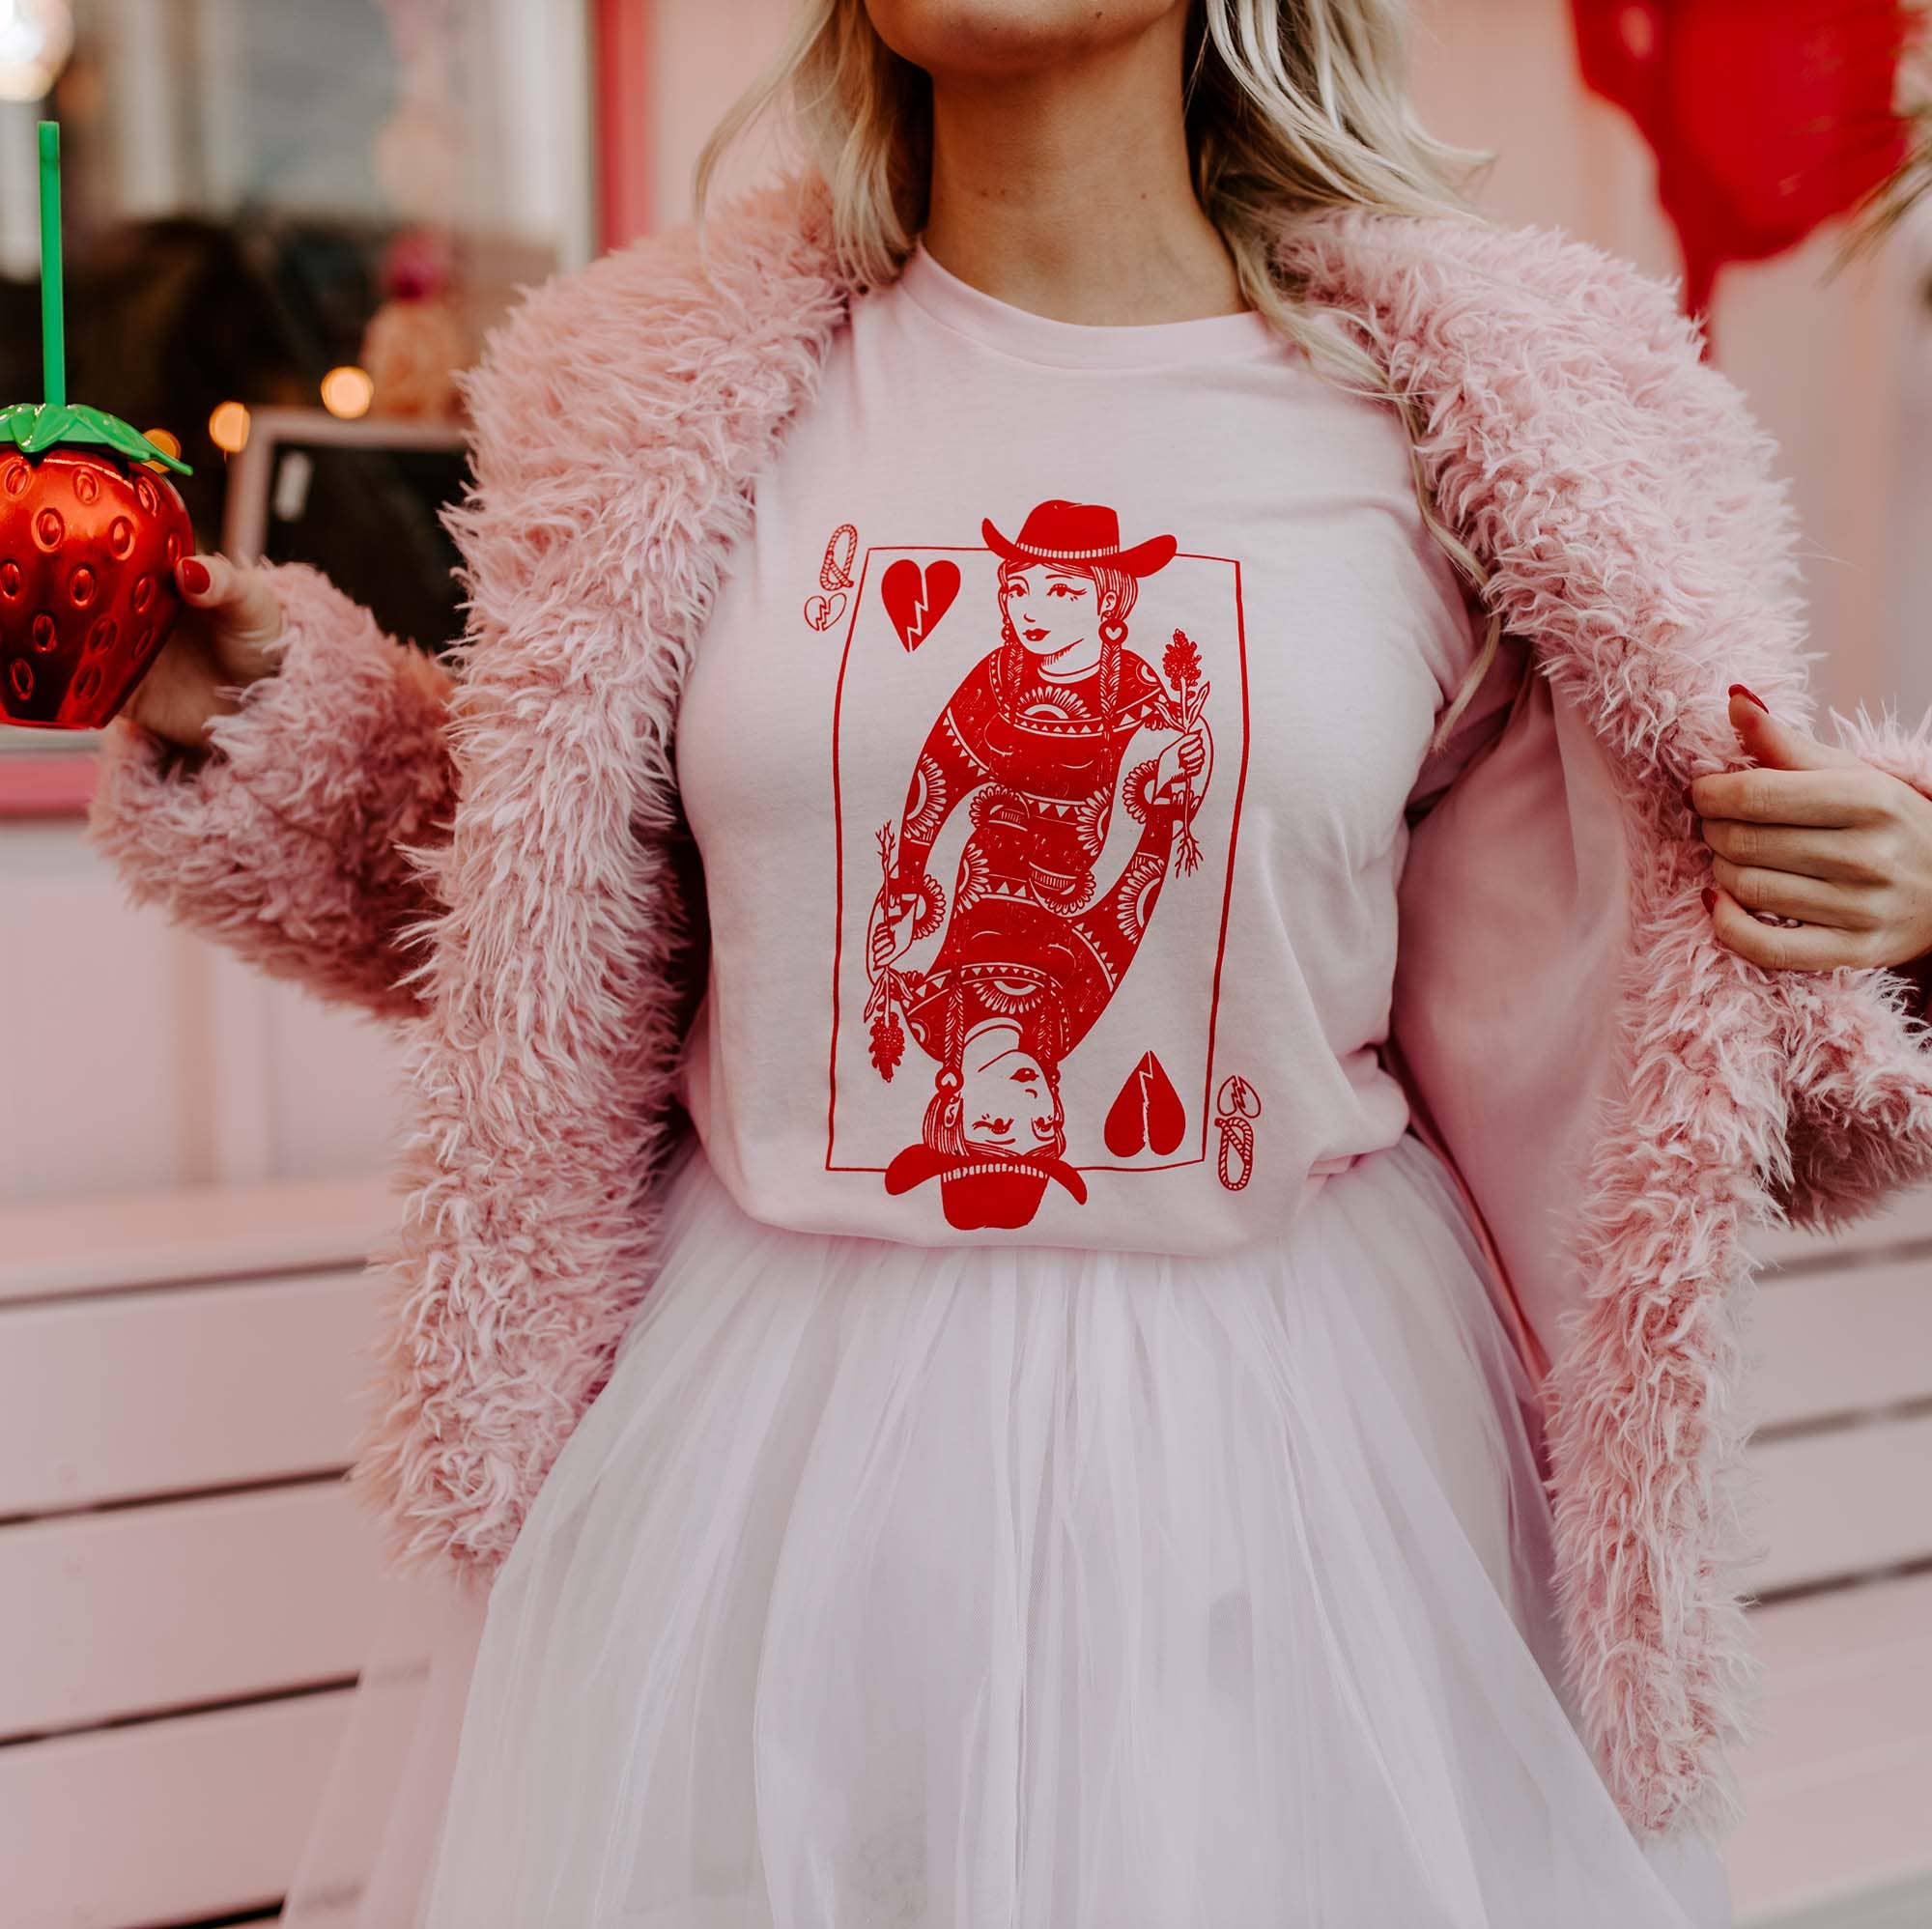 Queen of Hearts Pink Shirt, Valentine's Shirt Tops